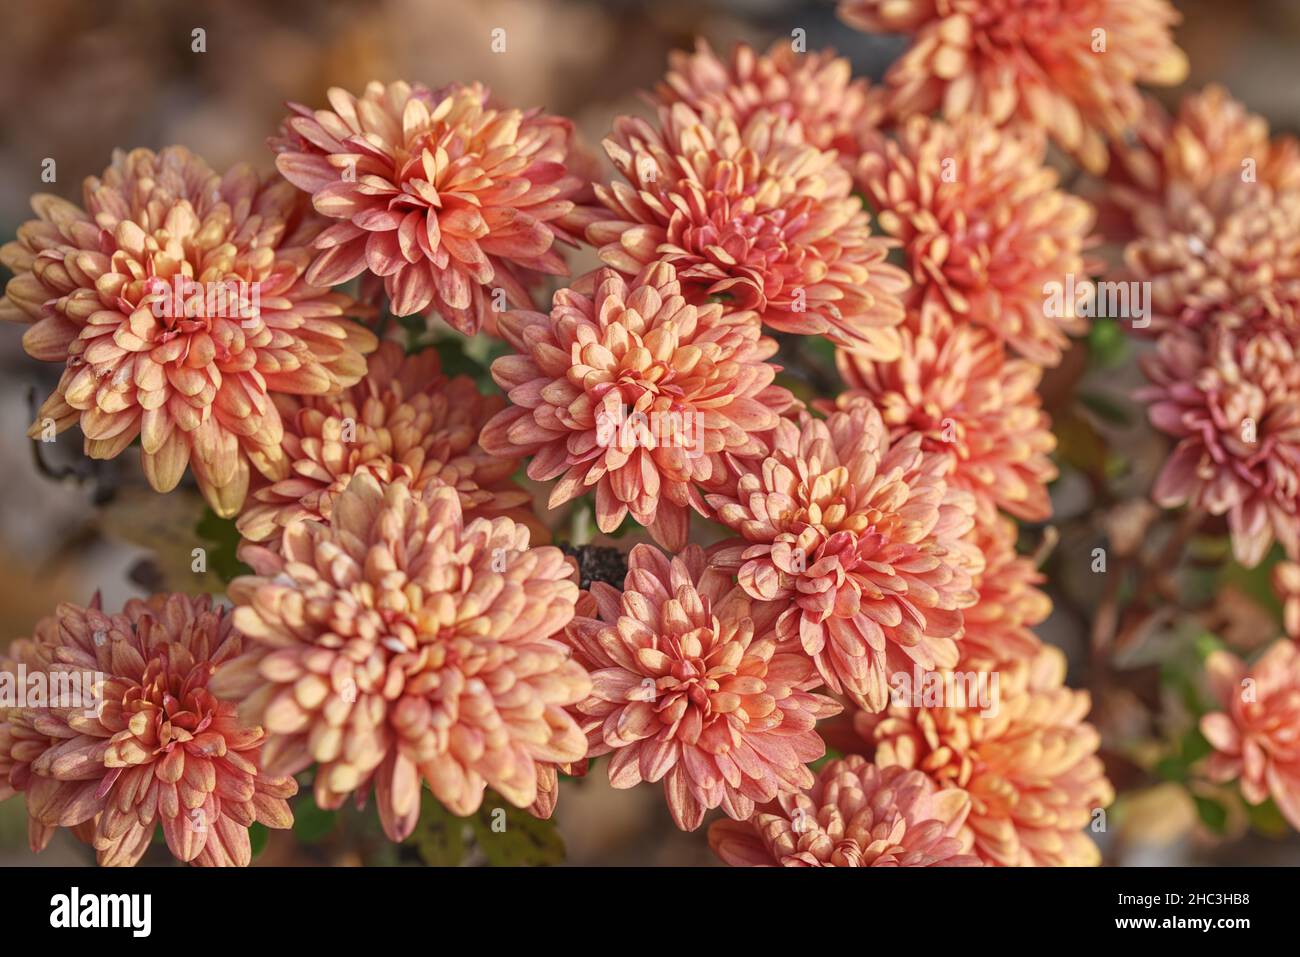 Rosa Chysanthemen - Chrysanthemum Foto Stock